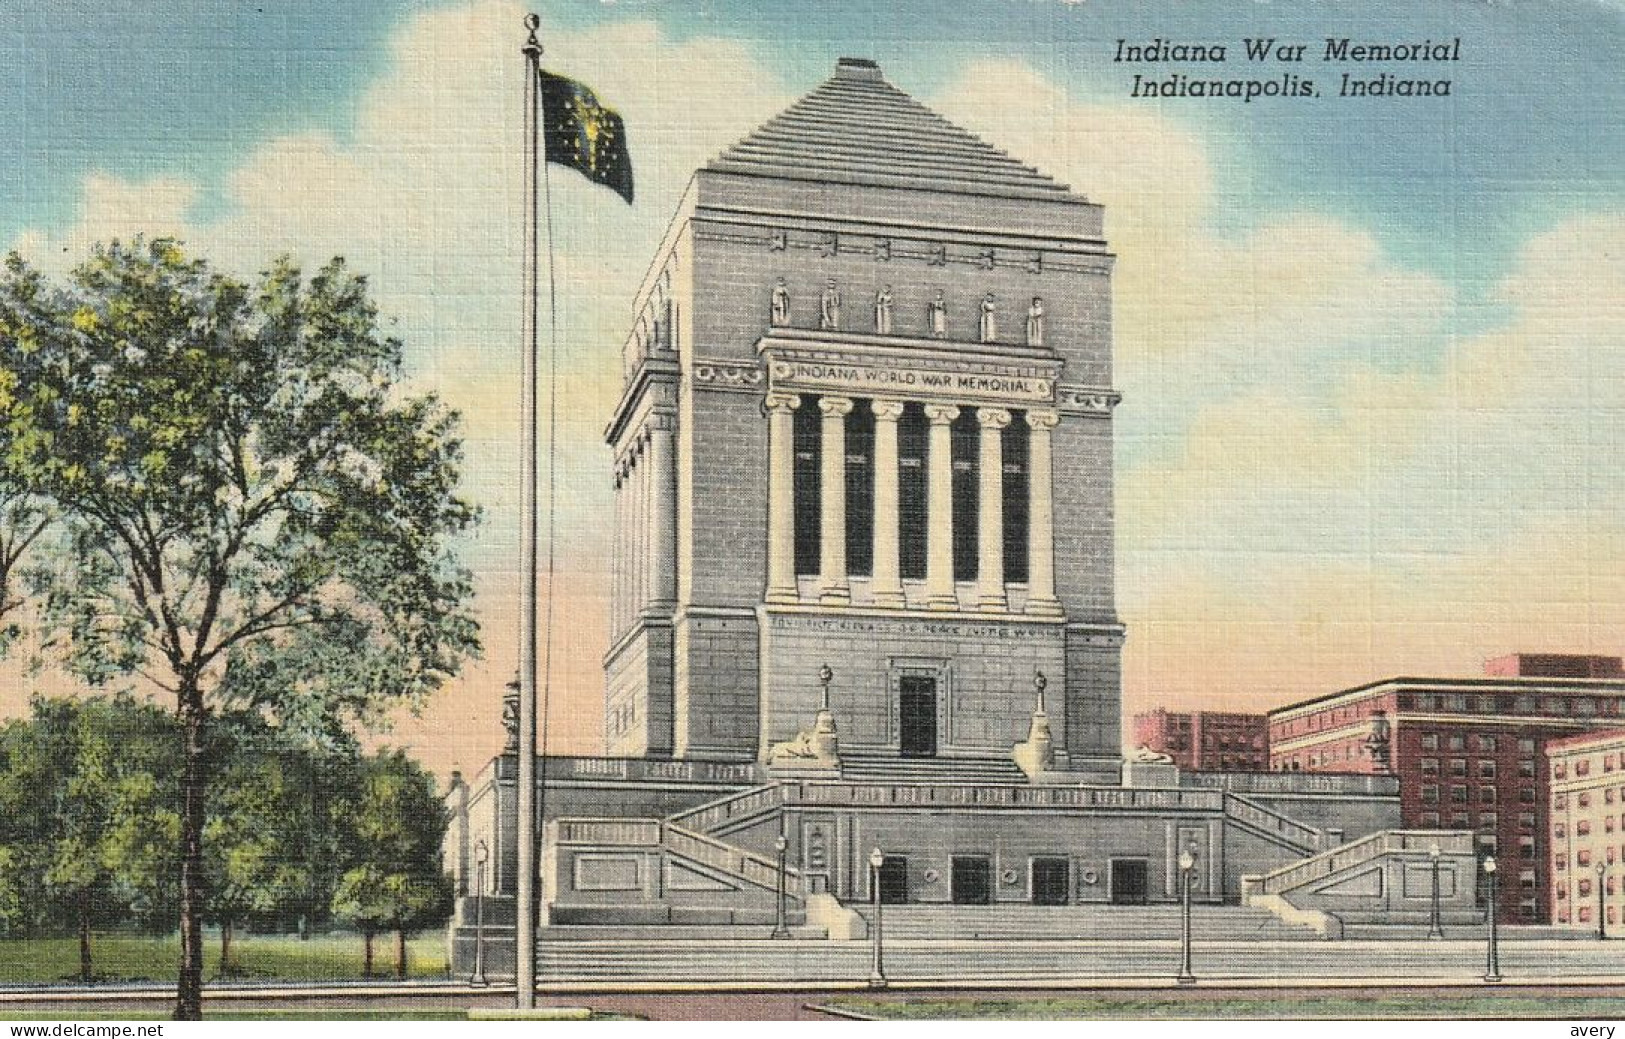 Indiana War Memorial, Indianapolis, Indiana - Indianapolis